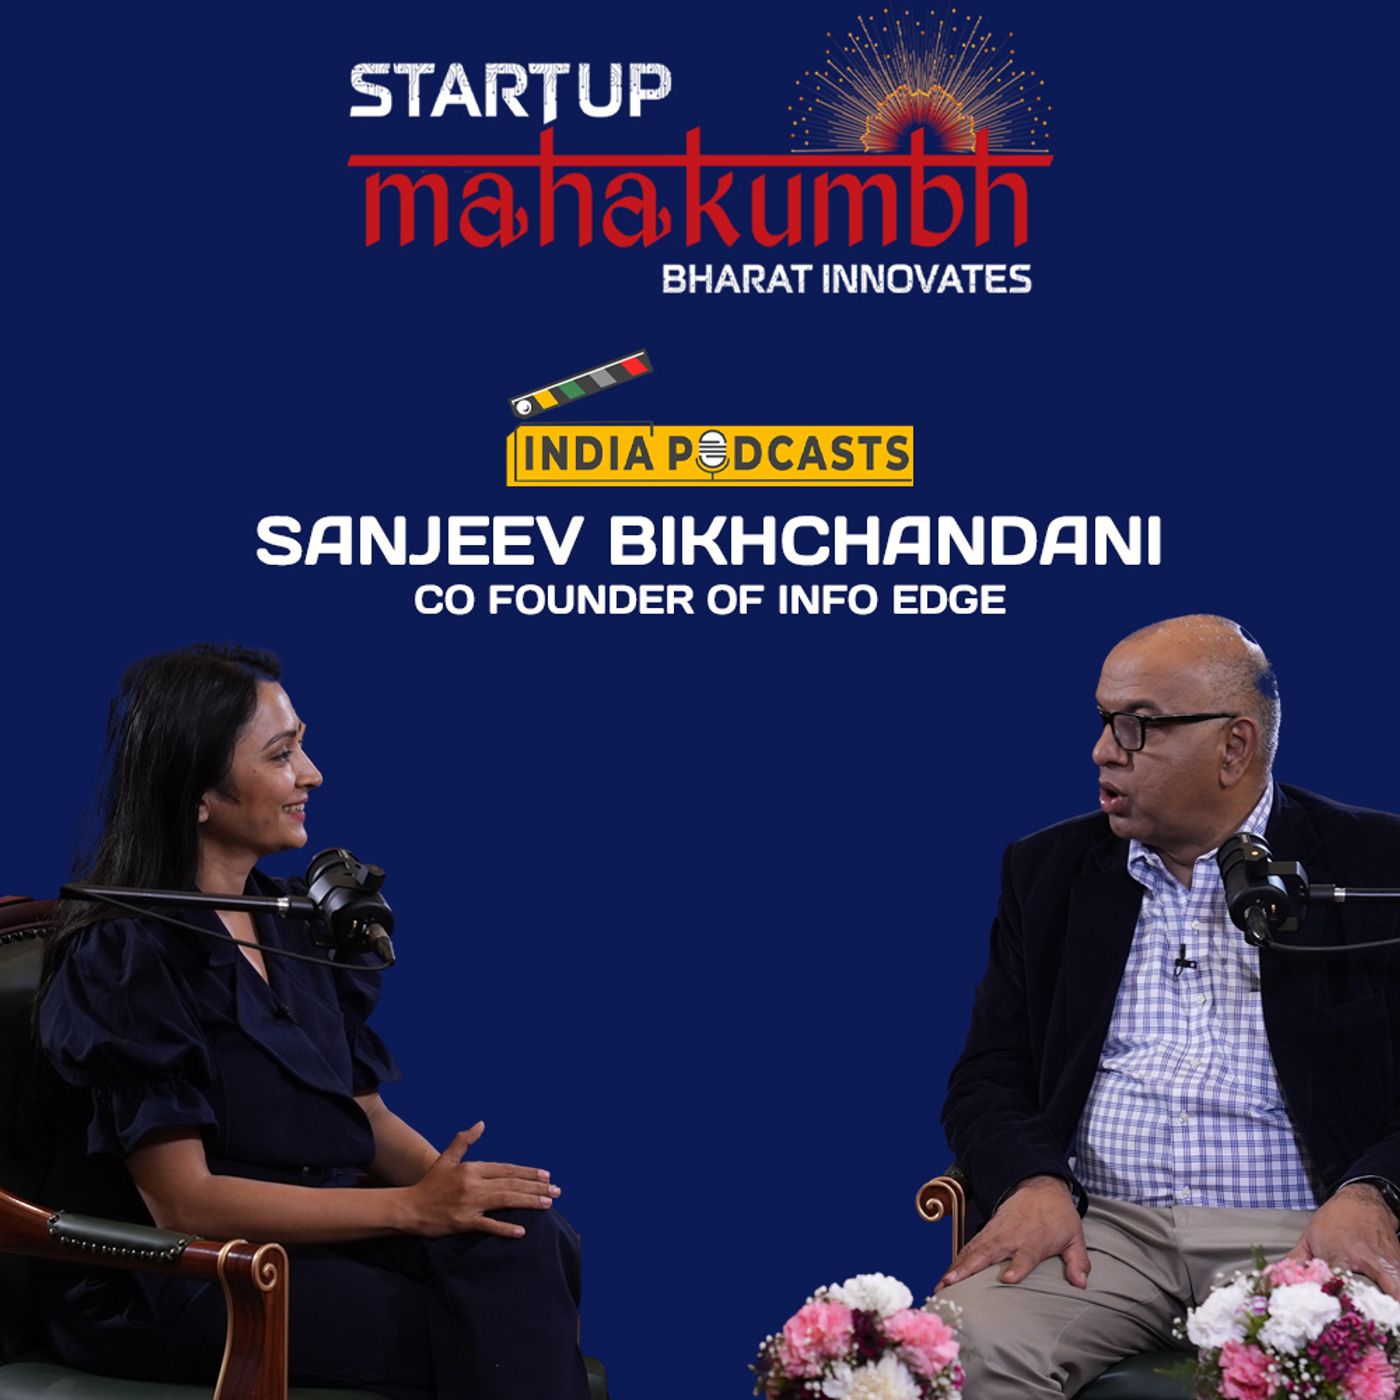 Dream Big, But Start Small: Sanjeev Bikhchandani, Co-Founder Info Edge To Startup Aspirants